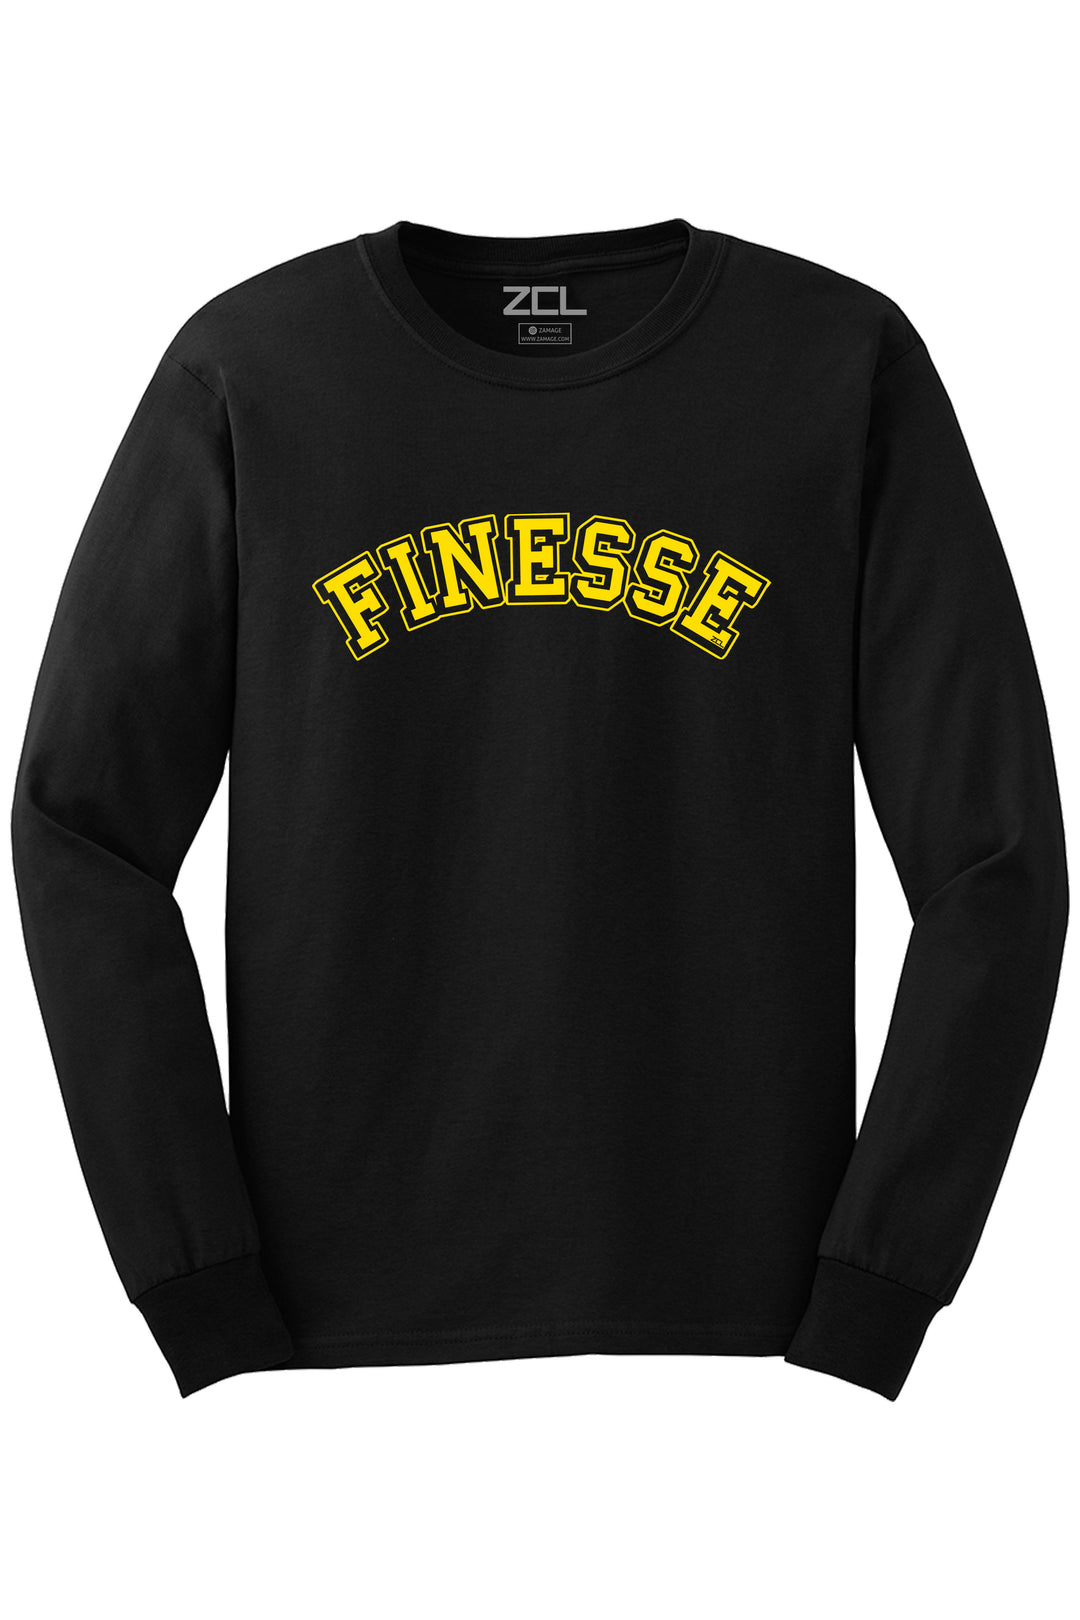 Finesse Long Sleeve Tee (Yellow Logo) - Zamage